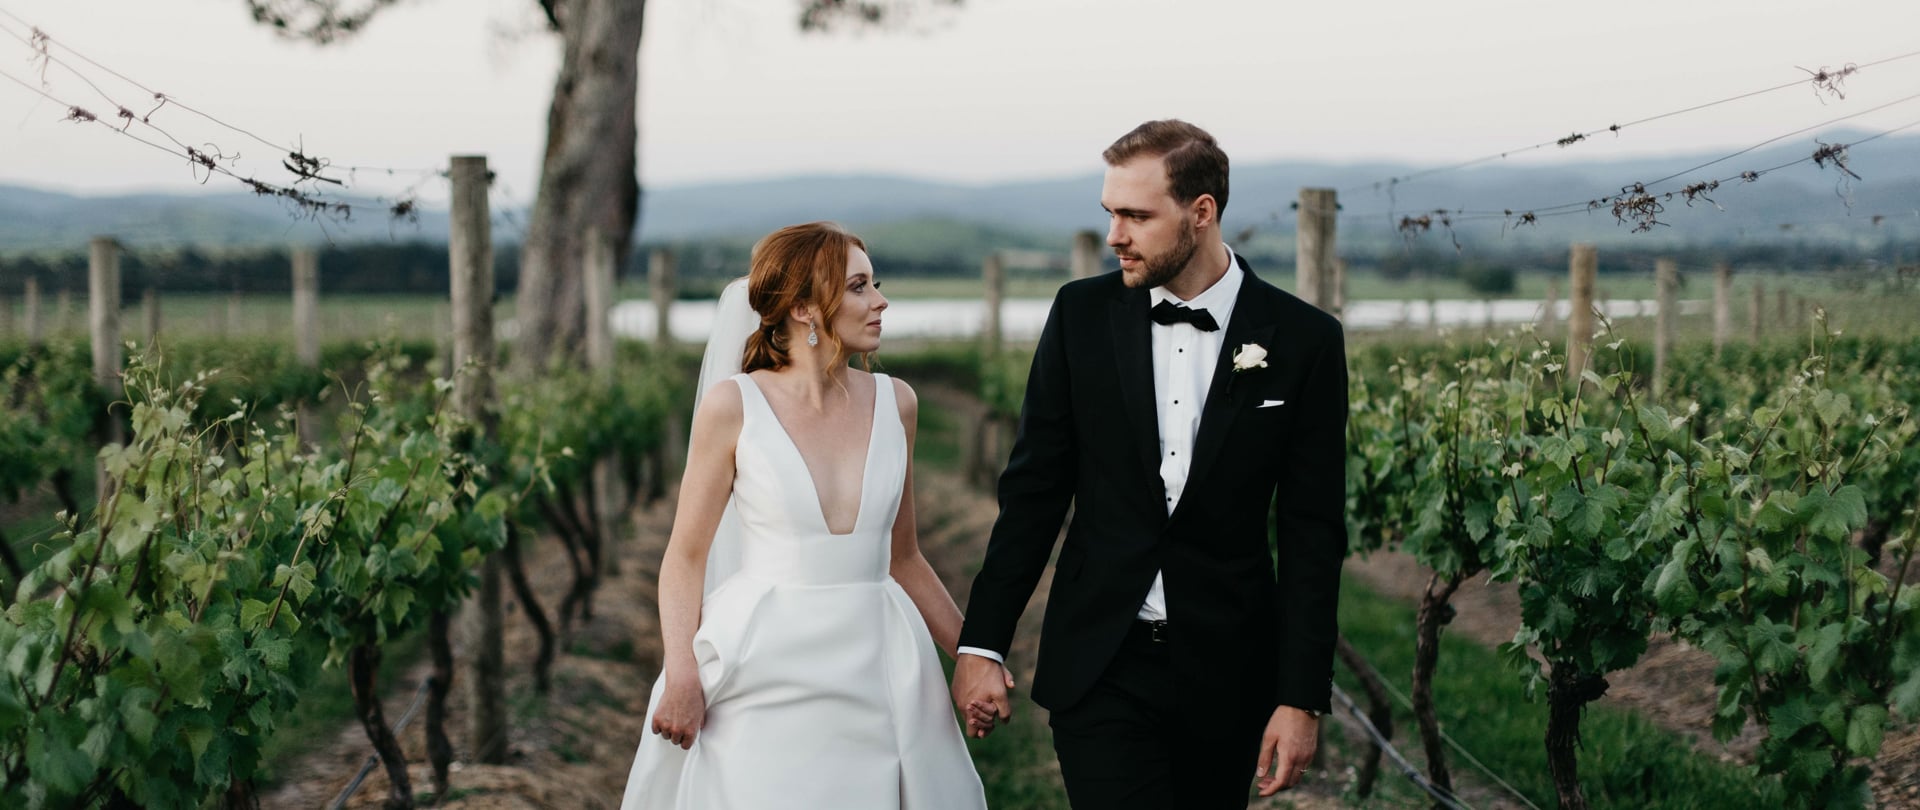 Chelsea & Andrew Wedding Video Filmed at Yarra Valley, Victoria